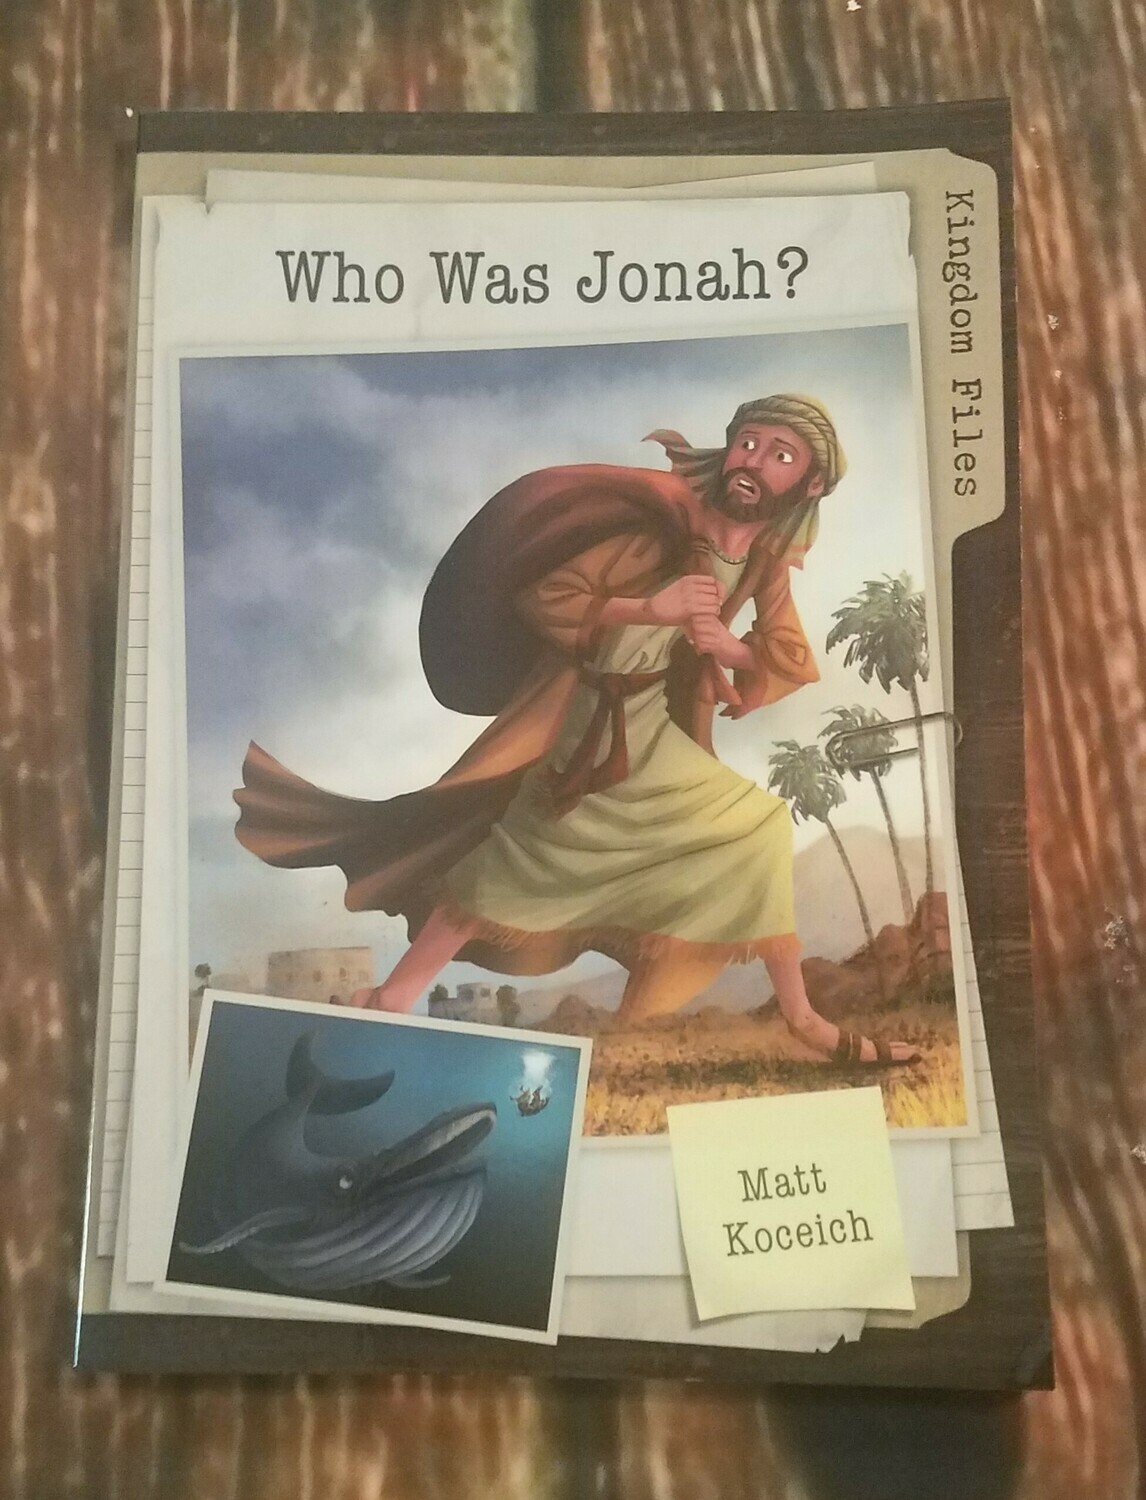 Kingdom Files: Who Was Jonah? by Matt Koceich